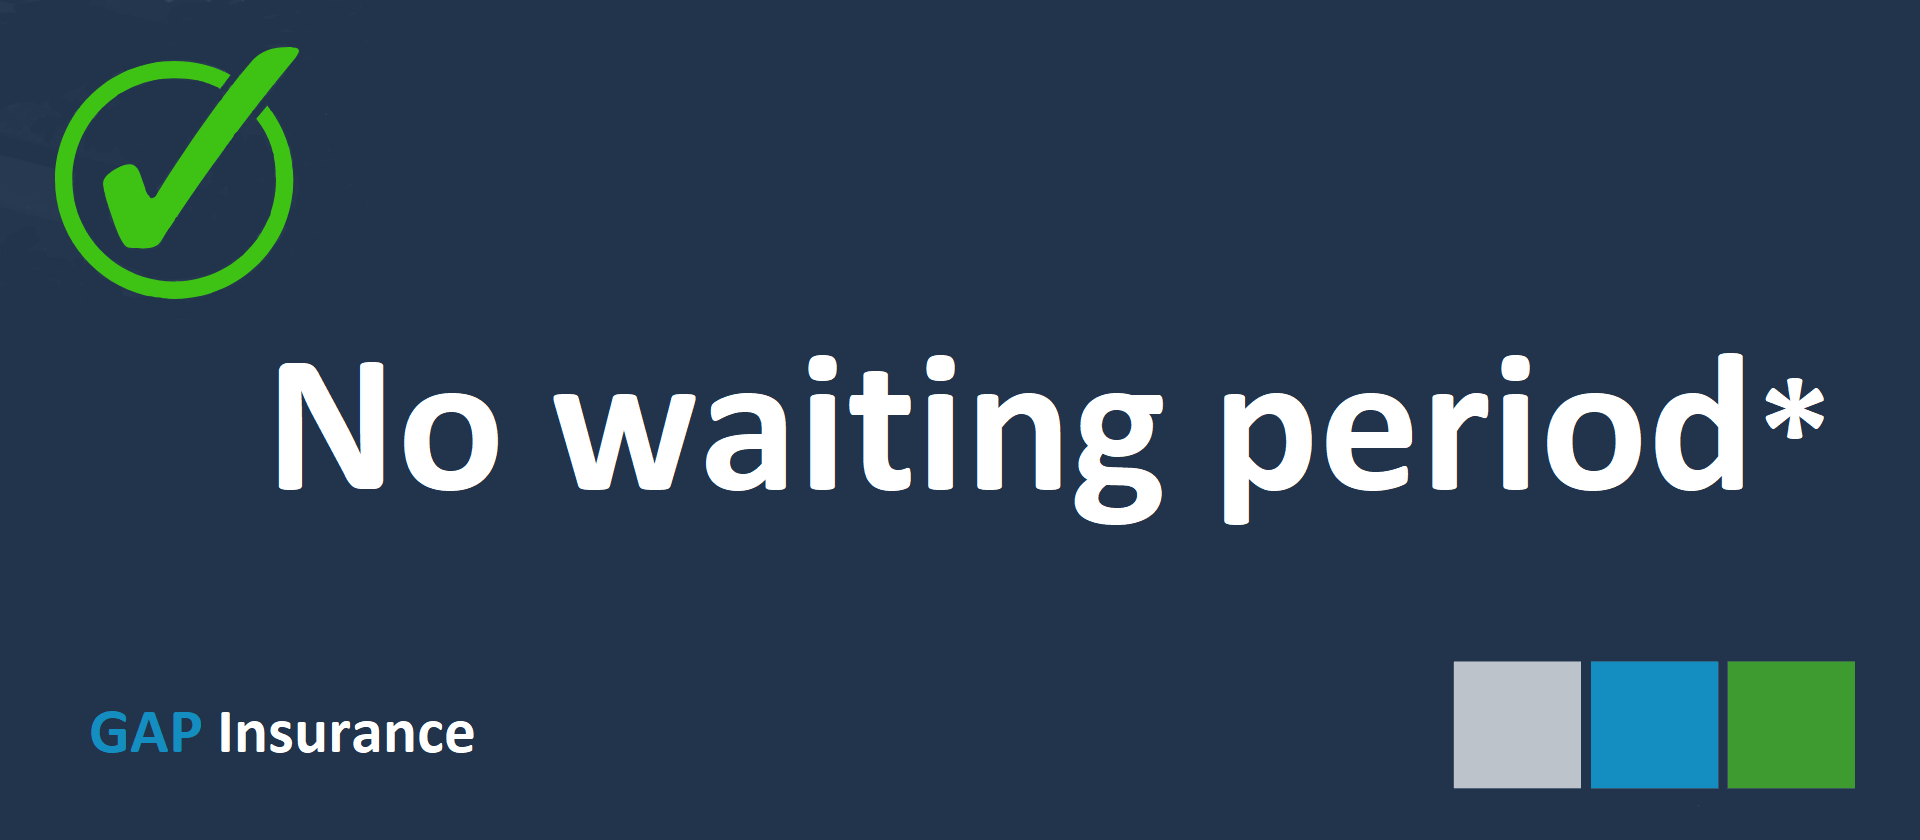 No waiting period